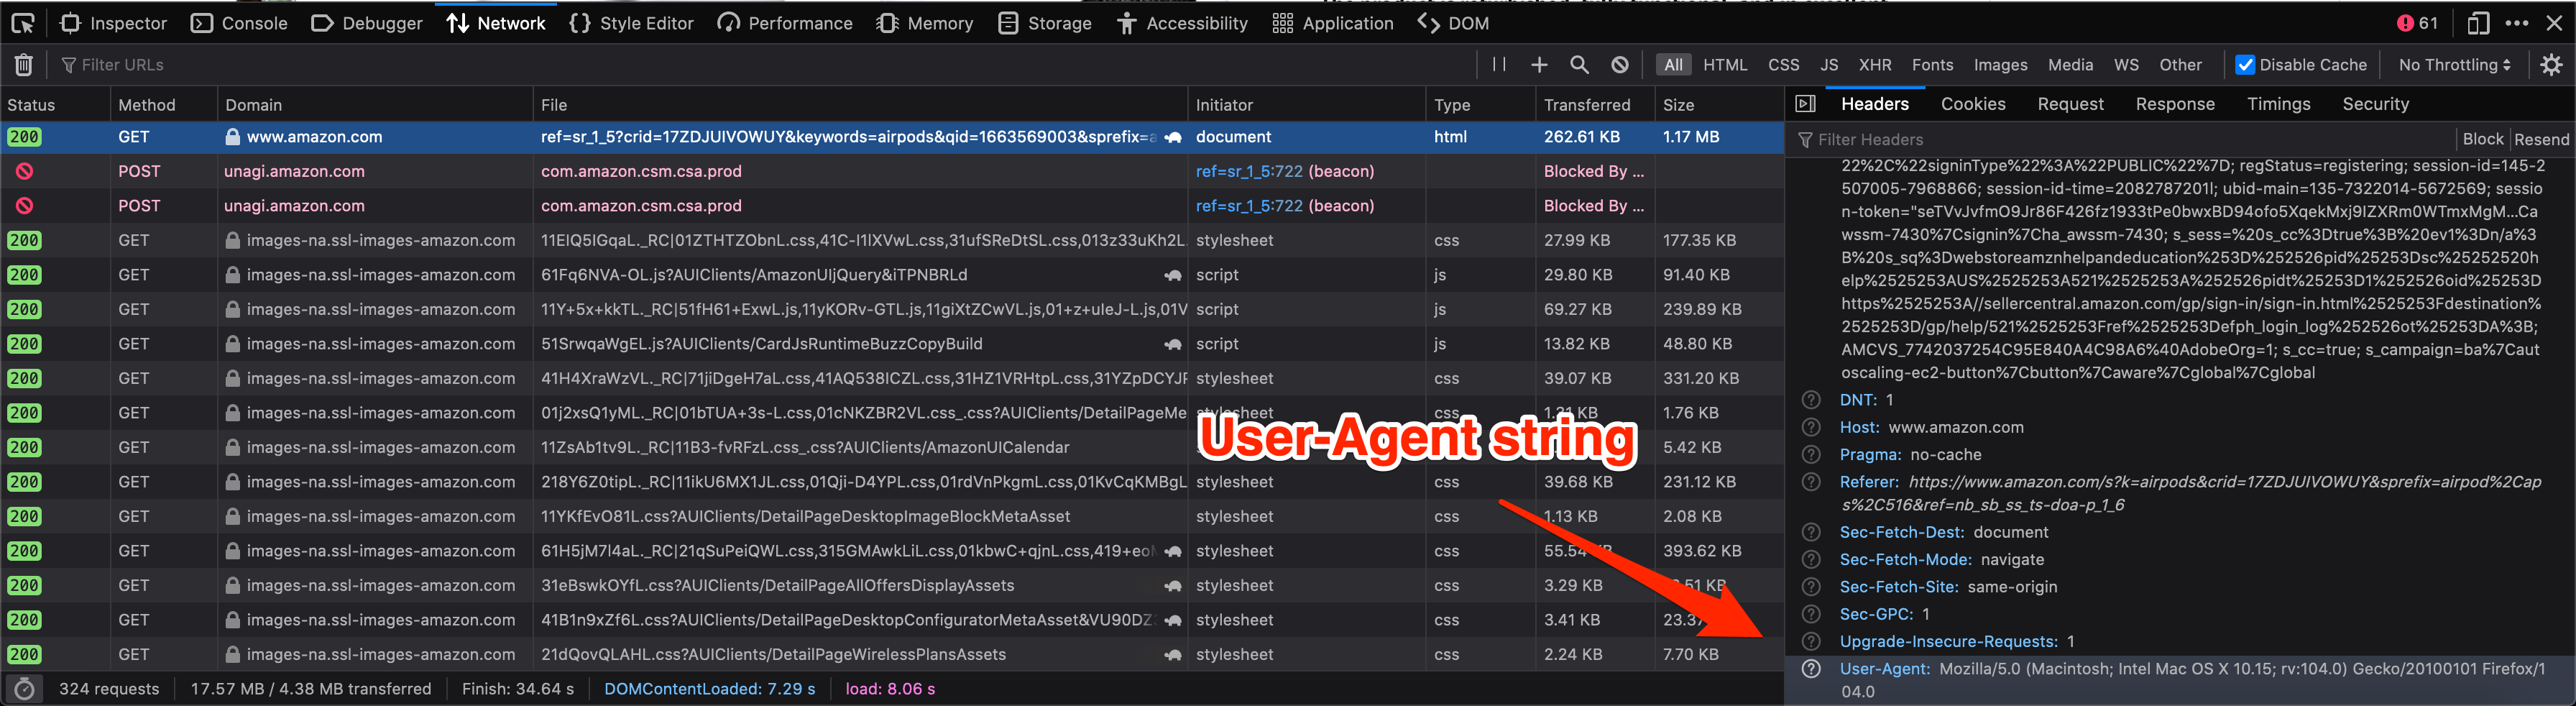 User-Agent string in developer tools